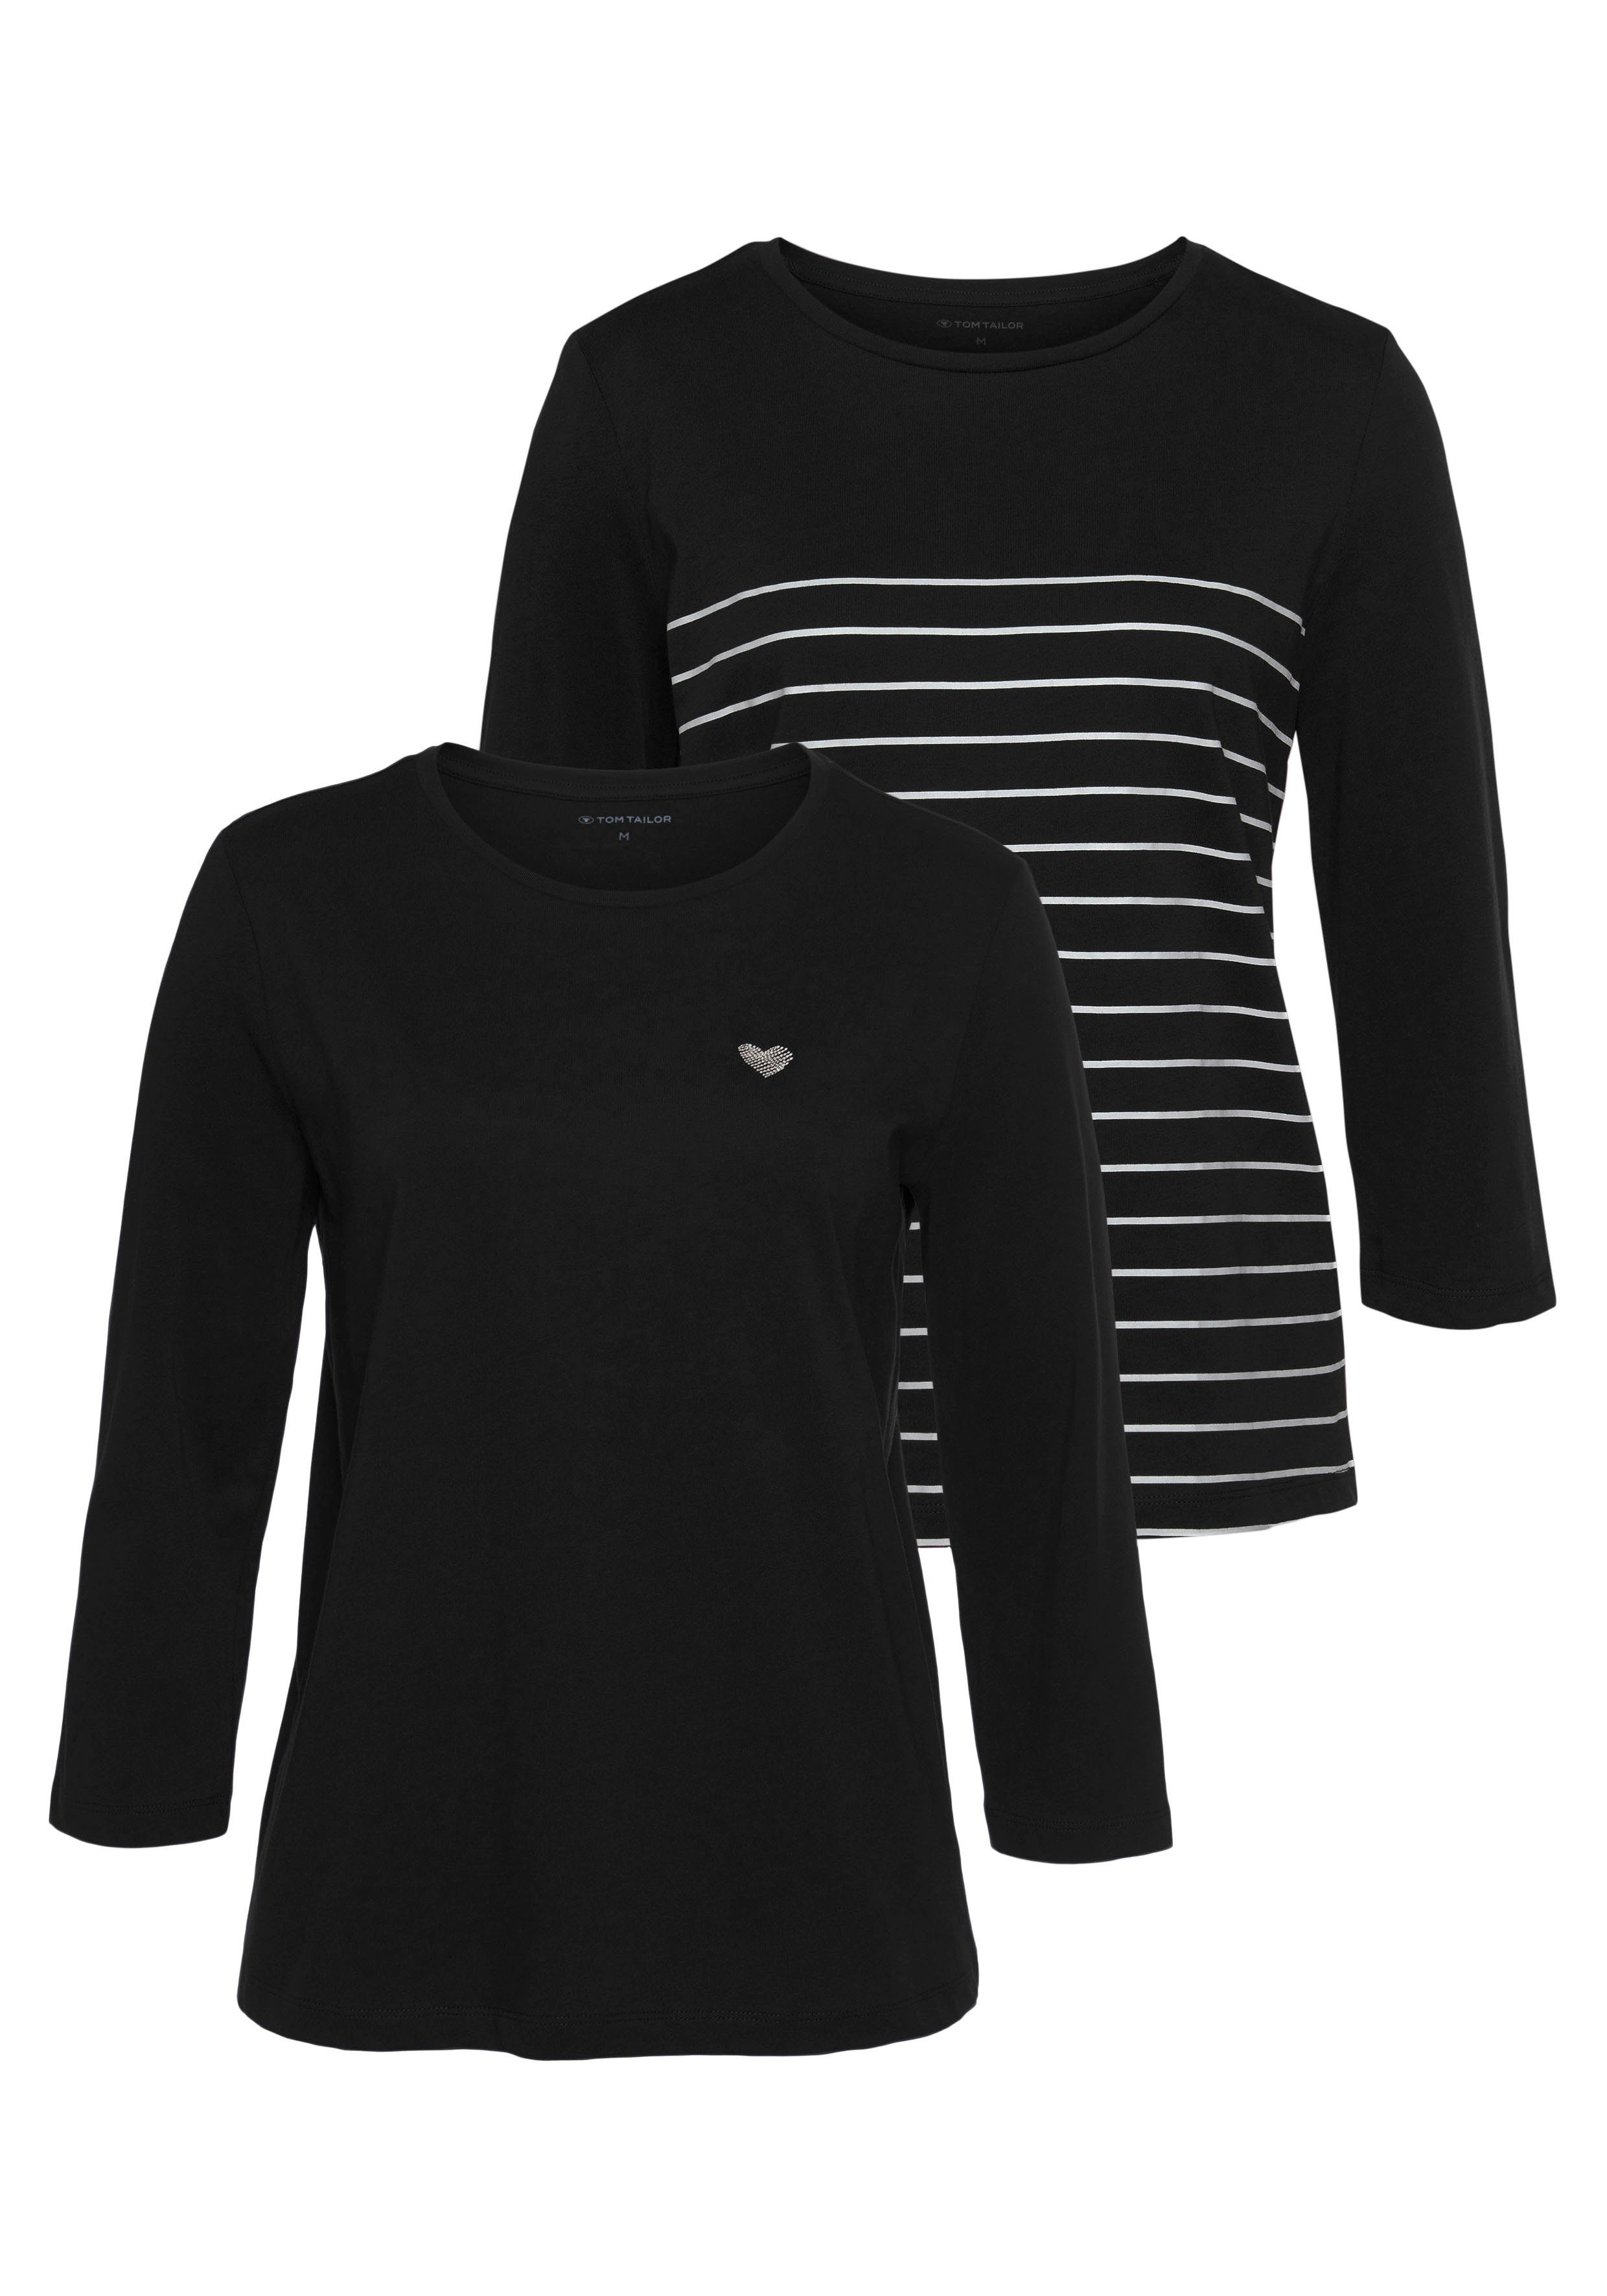 TOM TAILOR 3/4-Arm-Shirt (Packung, 2-tlg., 2er-Pack) im Doppel - immer Ringel + uni schwarz, schwarz-geringelt